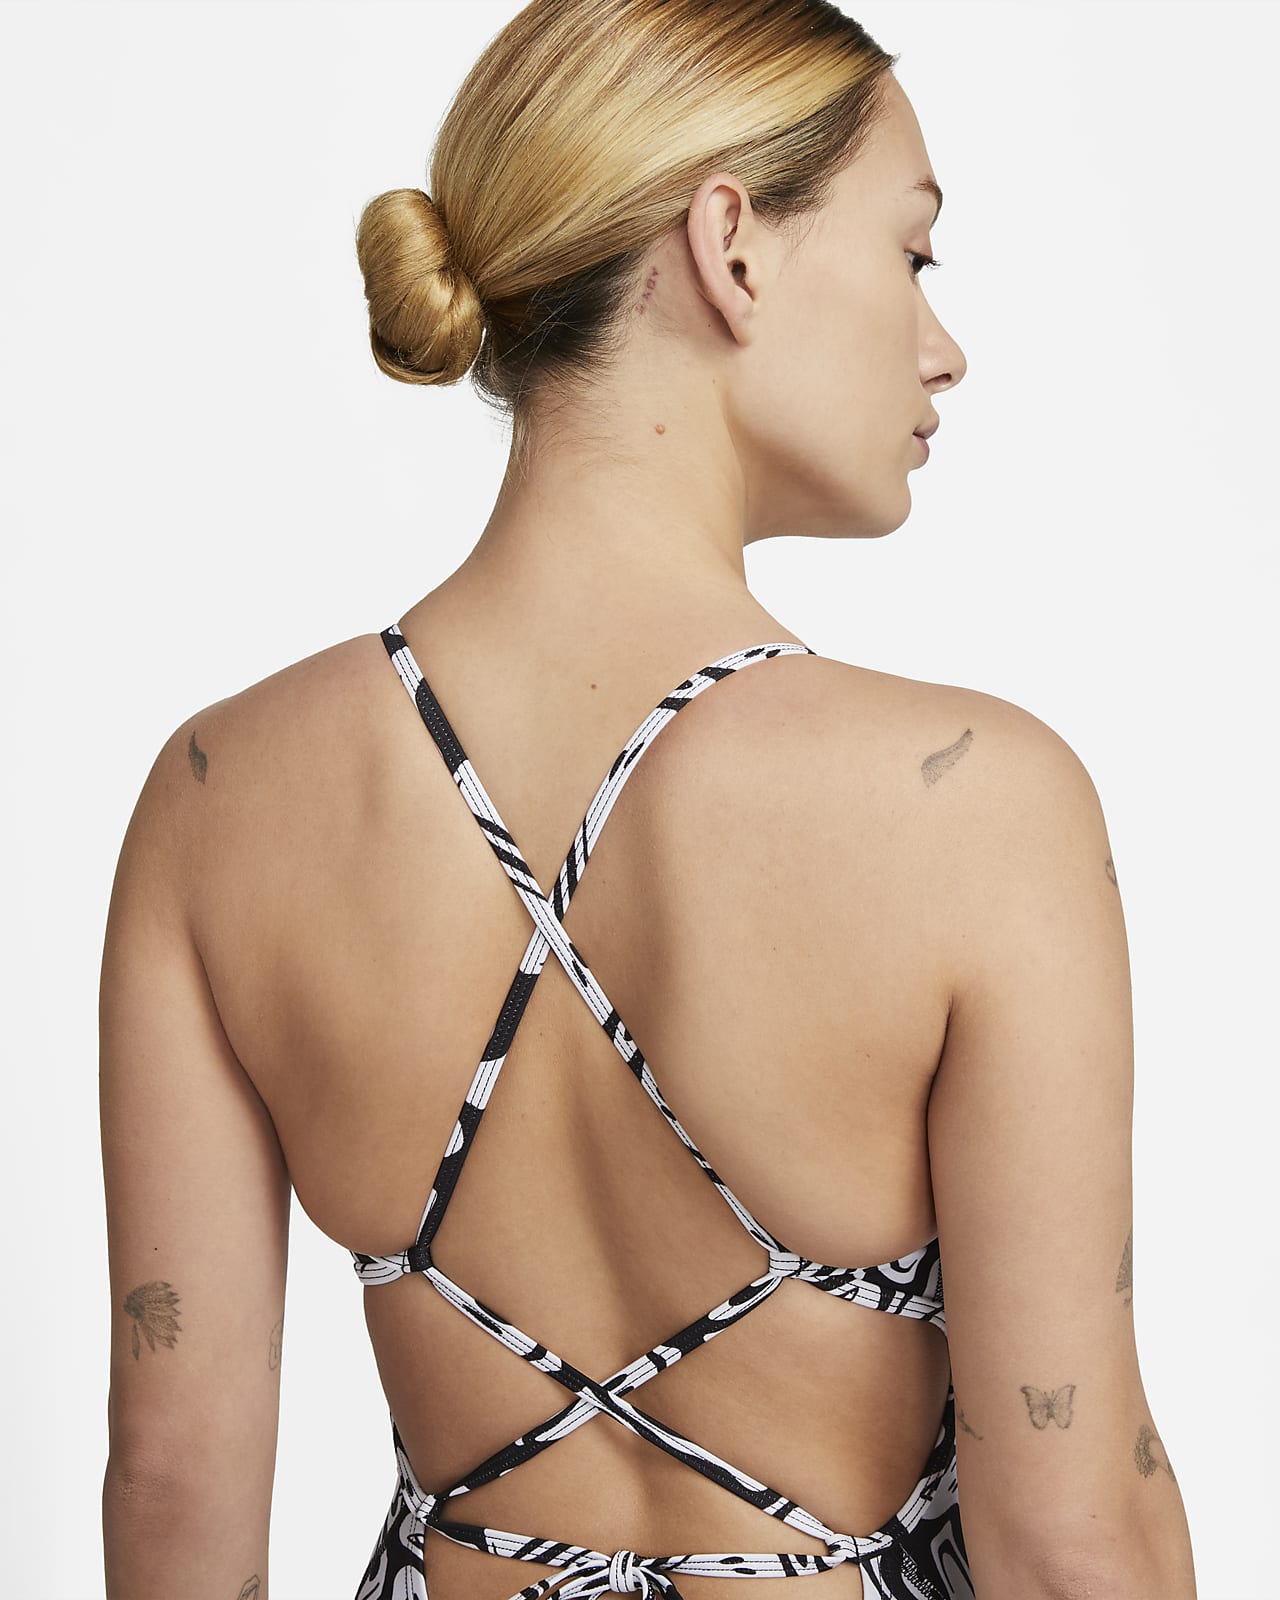 Nike Women's Hydrastrong Tie Dye Crossback One Piece Swimsuit at